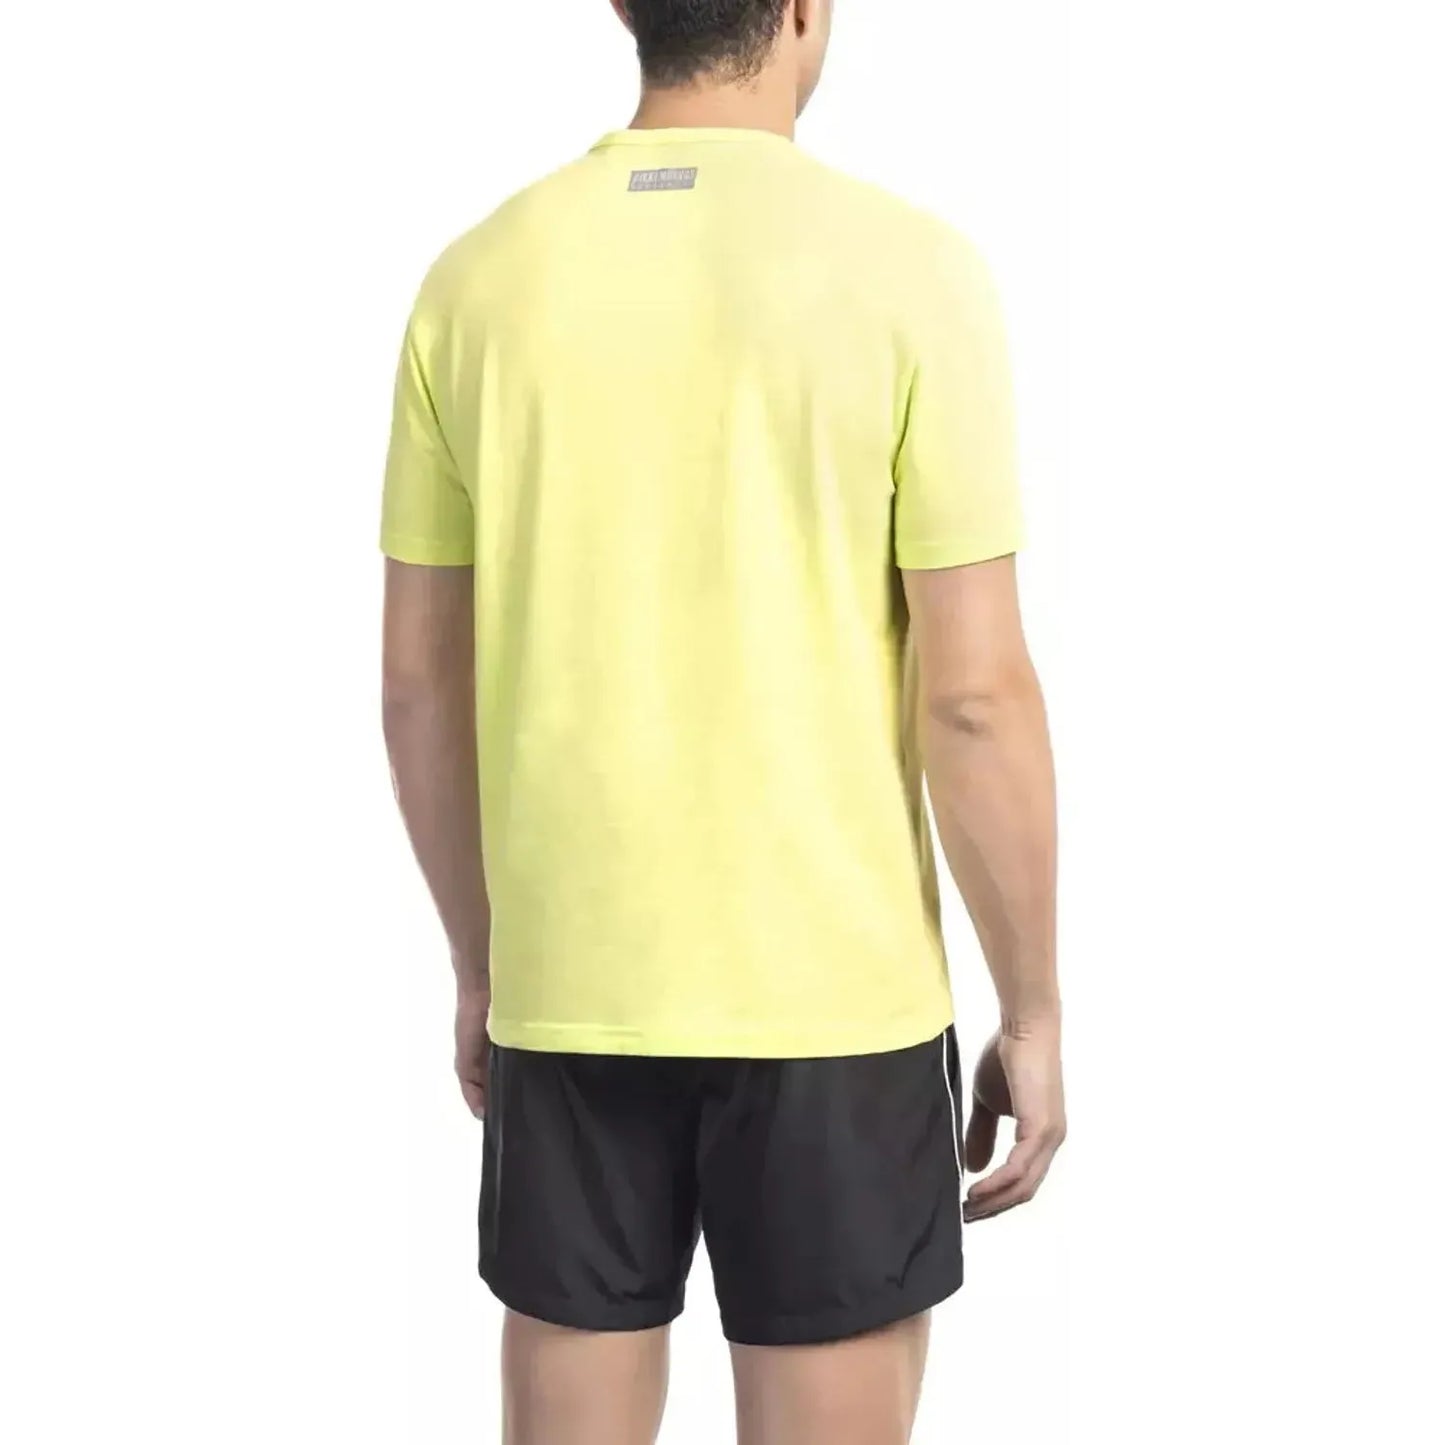 Bikkembergs Radiant Yellow Cotton Blend Printed T-Shirt yellow-cotton-t-shirt product-22058-491818399-23-f7fd8e26-ffa.webp